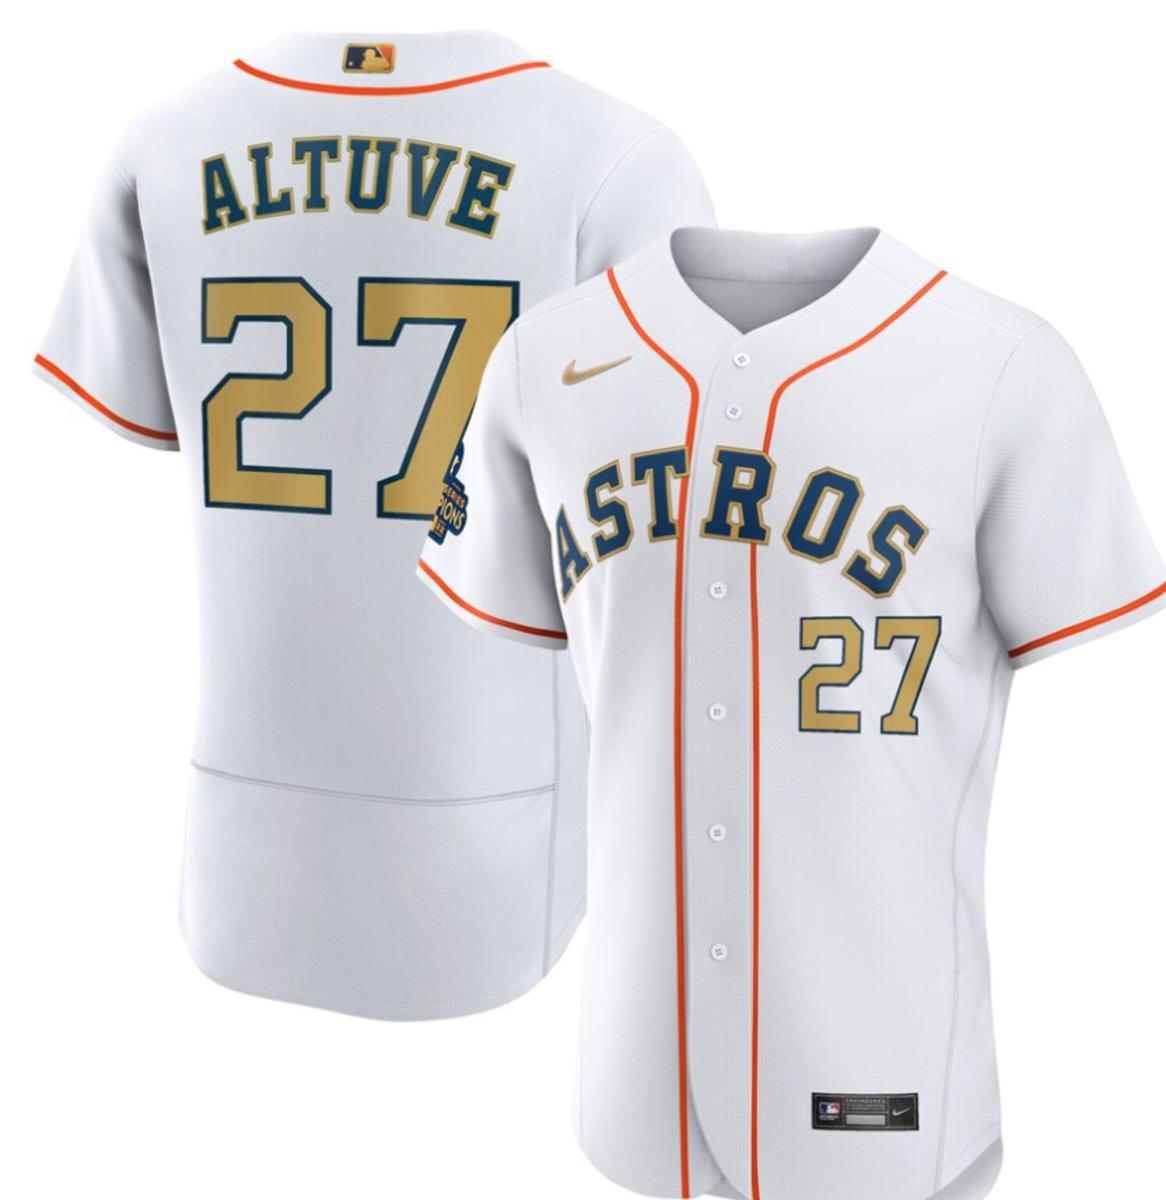 Authentic vs. replica Astros jerseys